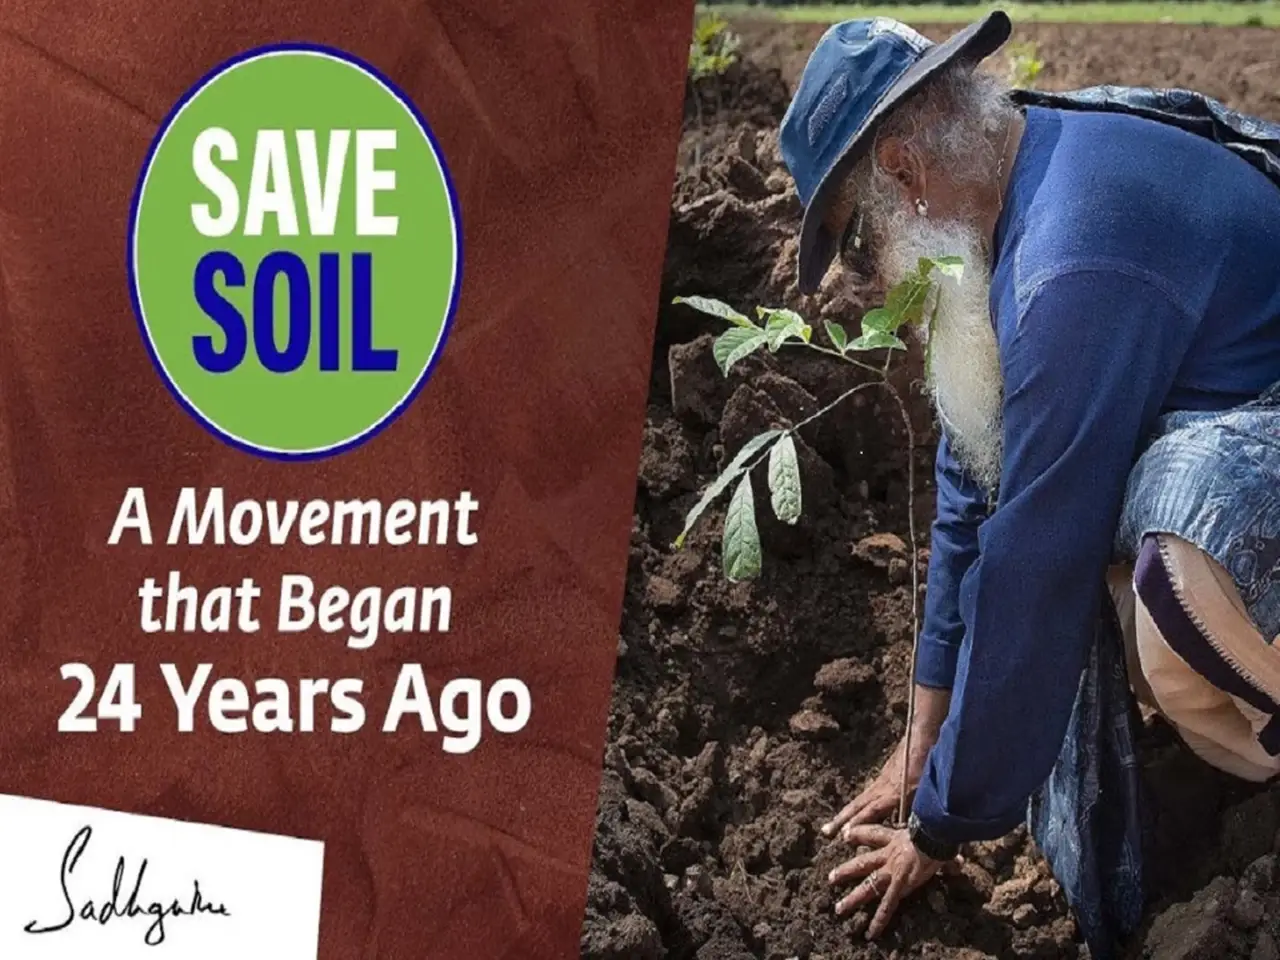 Sadguru's Save Soil Movement